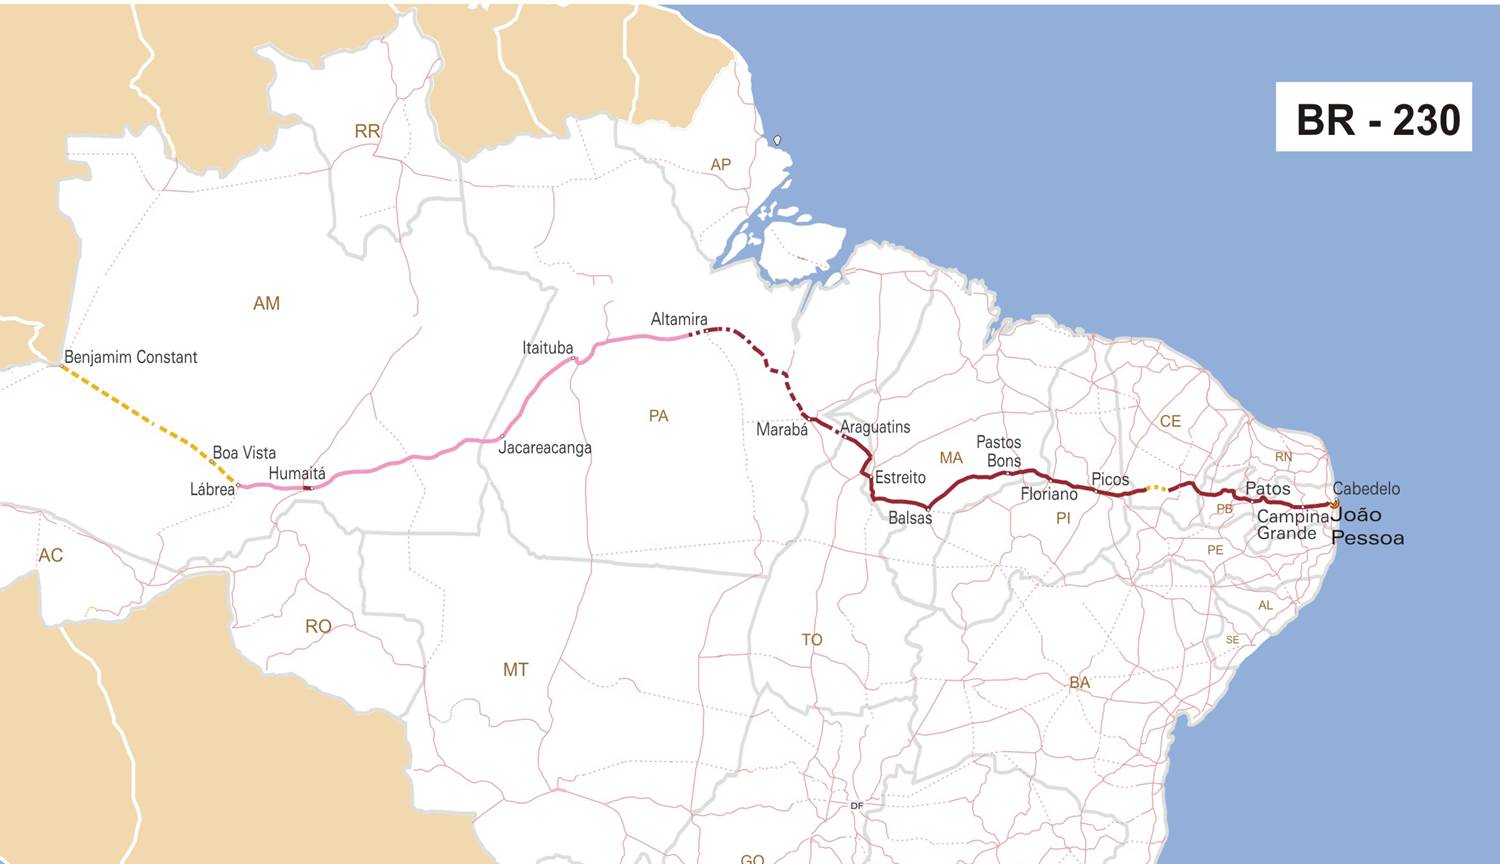 BR-230 Trans-Amazonian Highway; Wikipedia